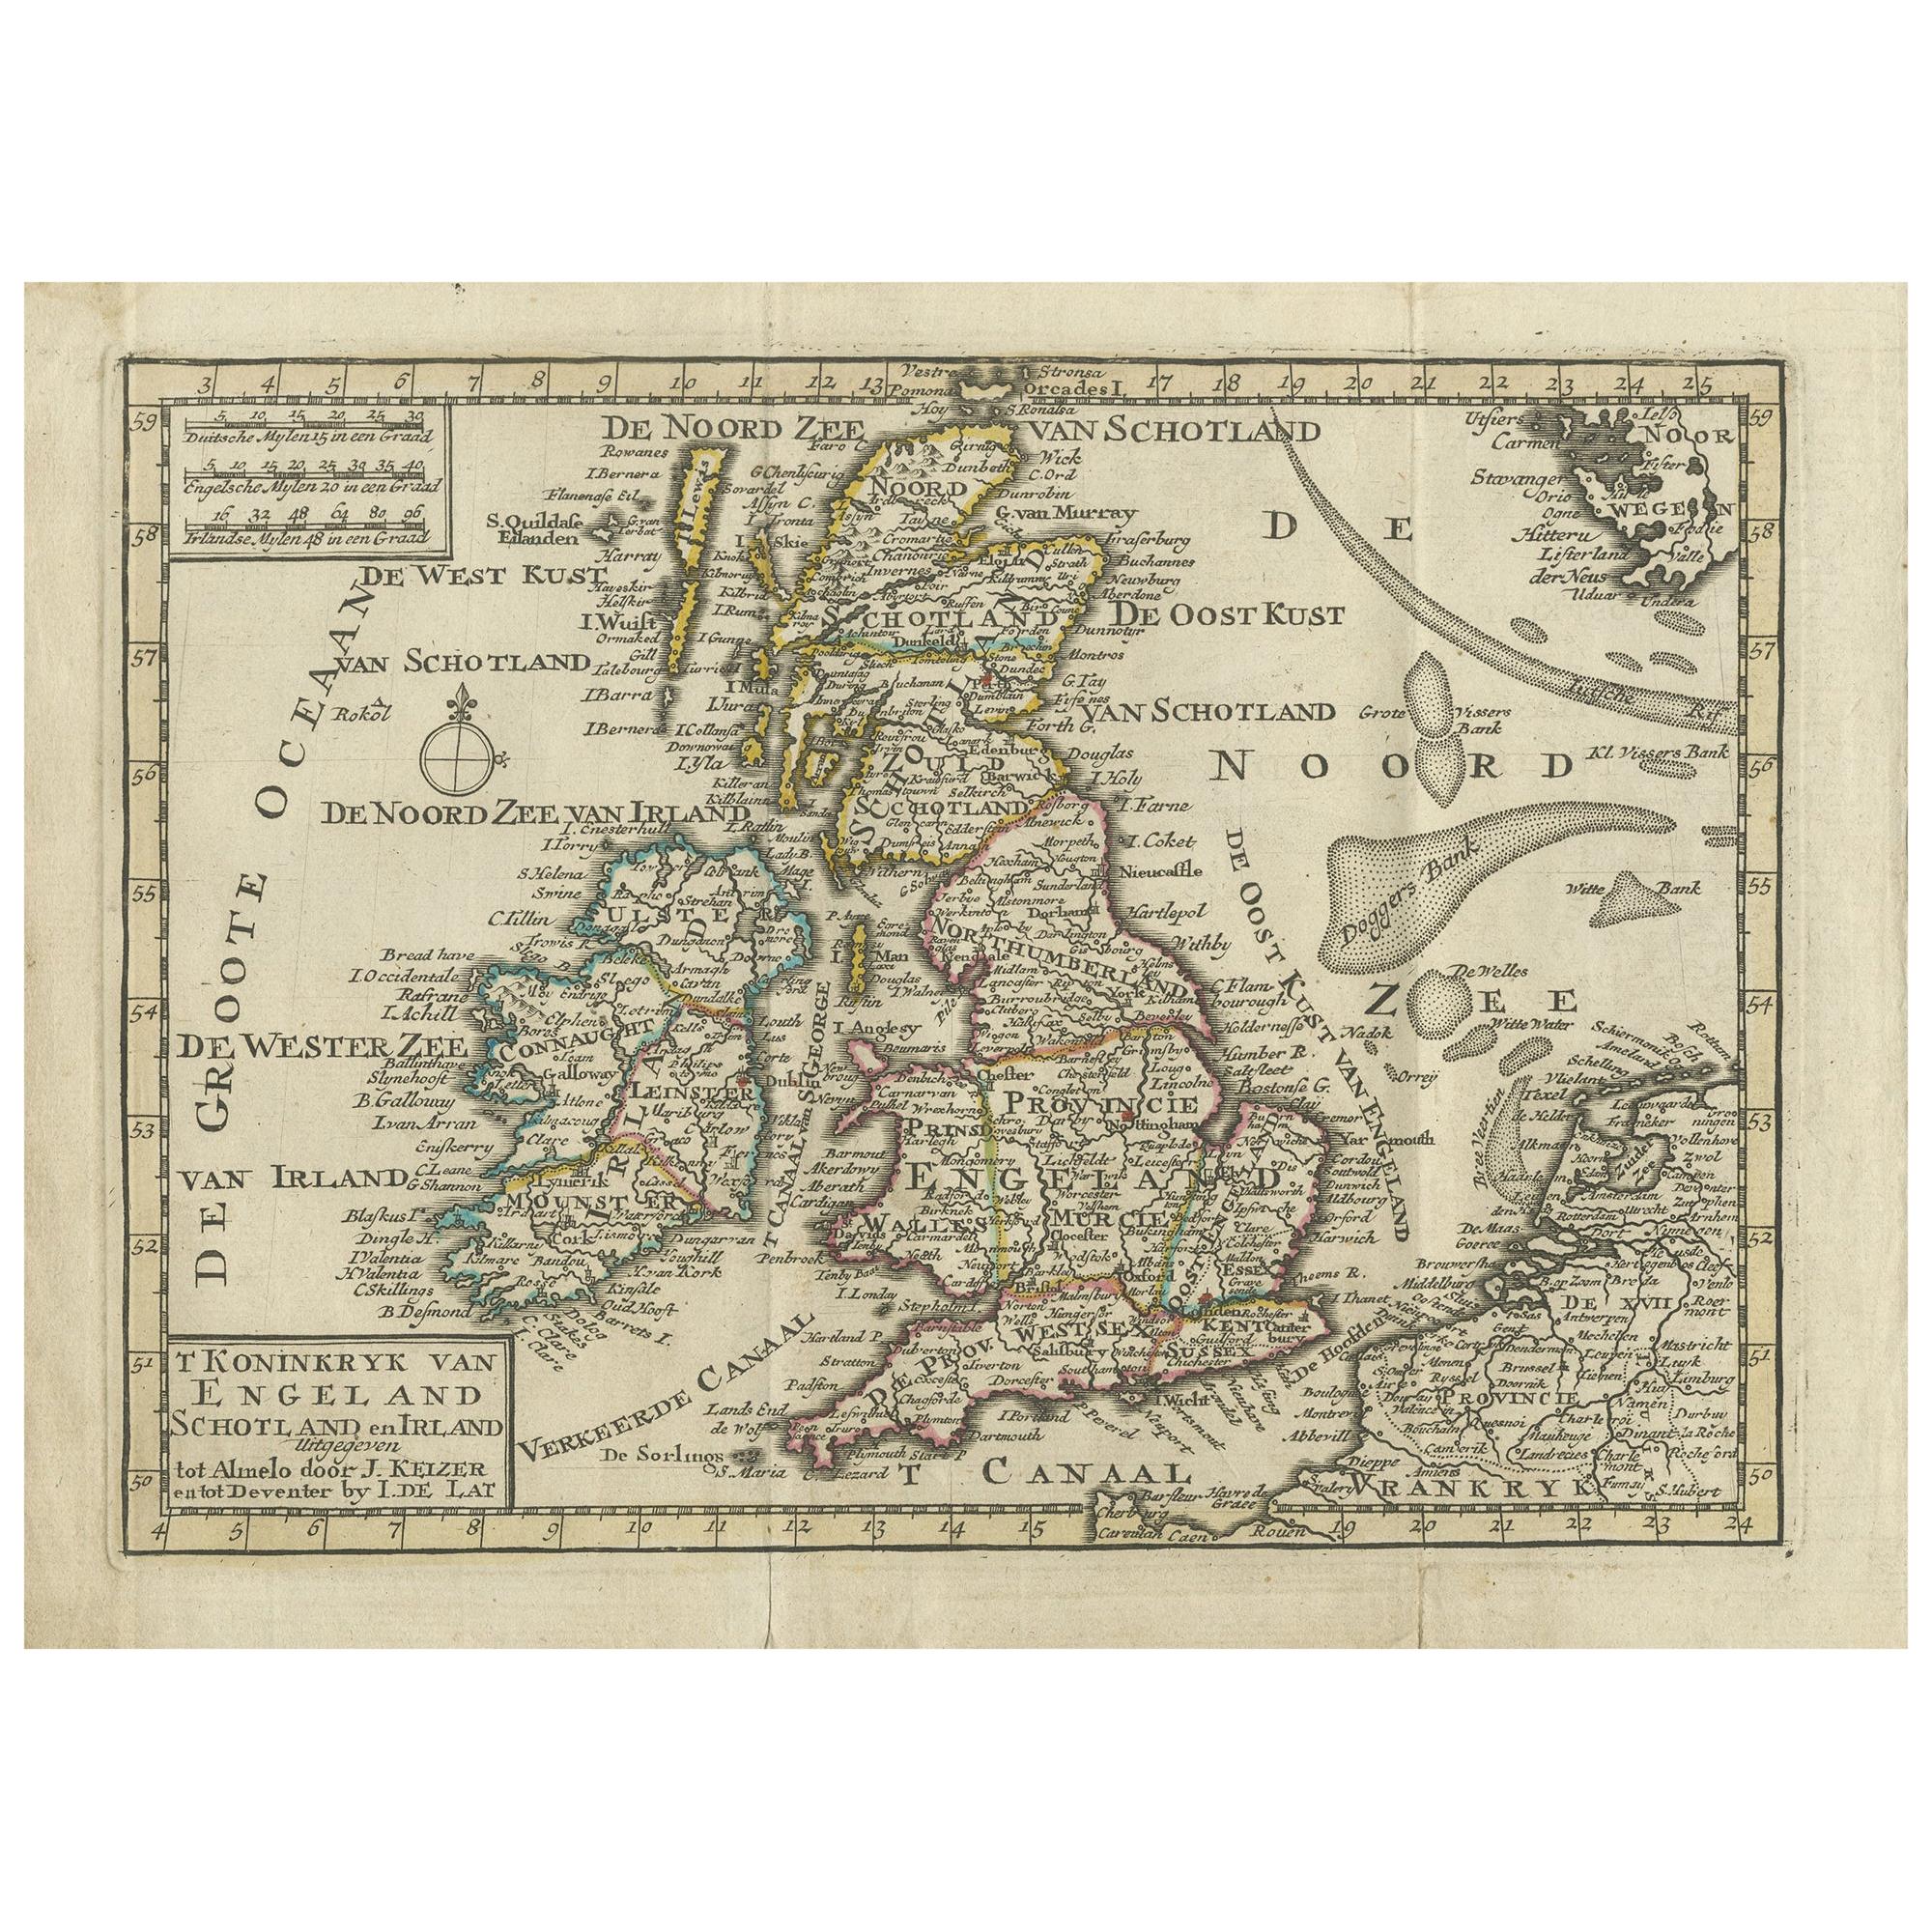 Antique Map of England, Scotland and Ireland by Keizer & de Lat, 1788